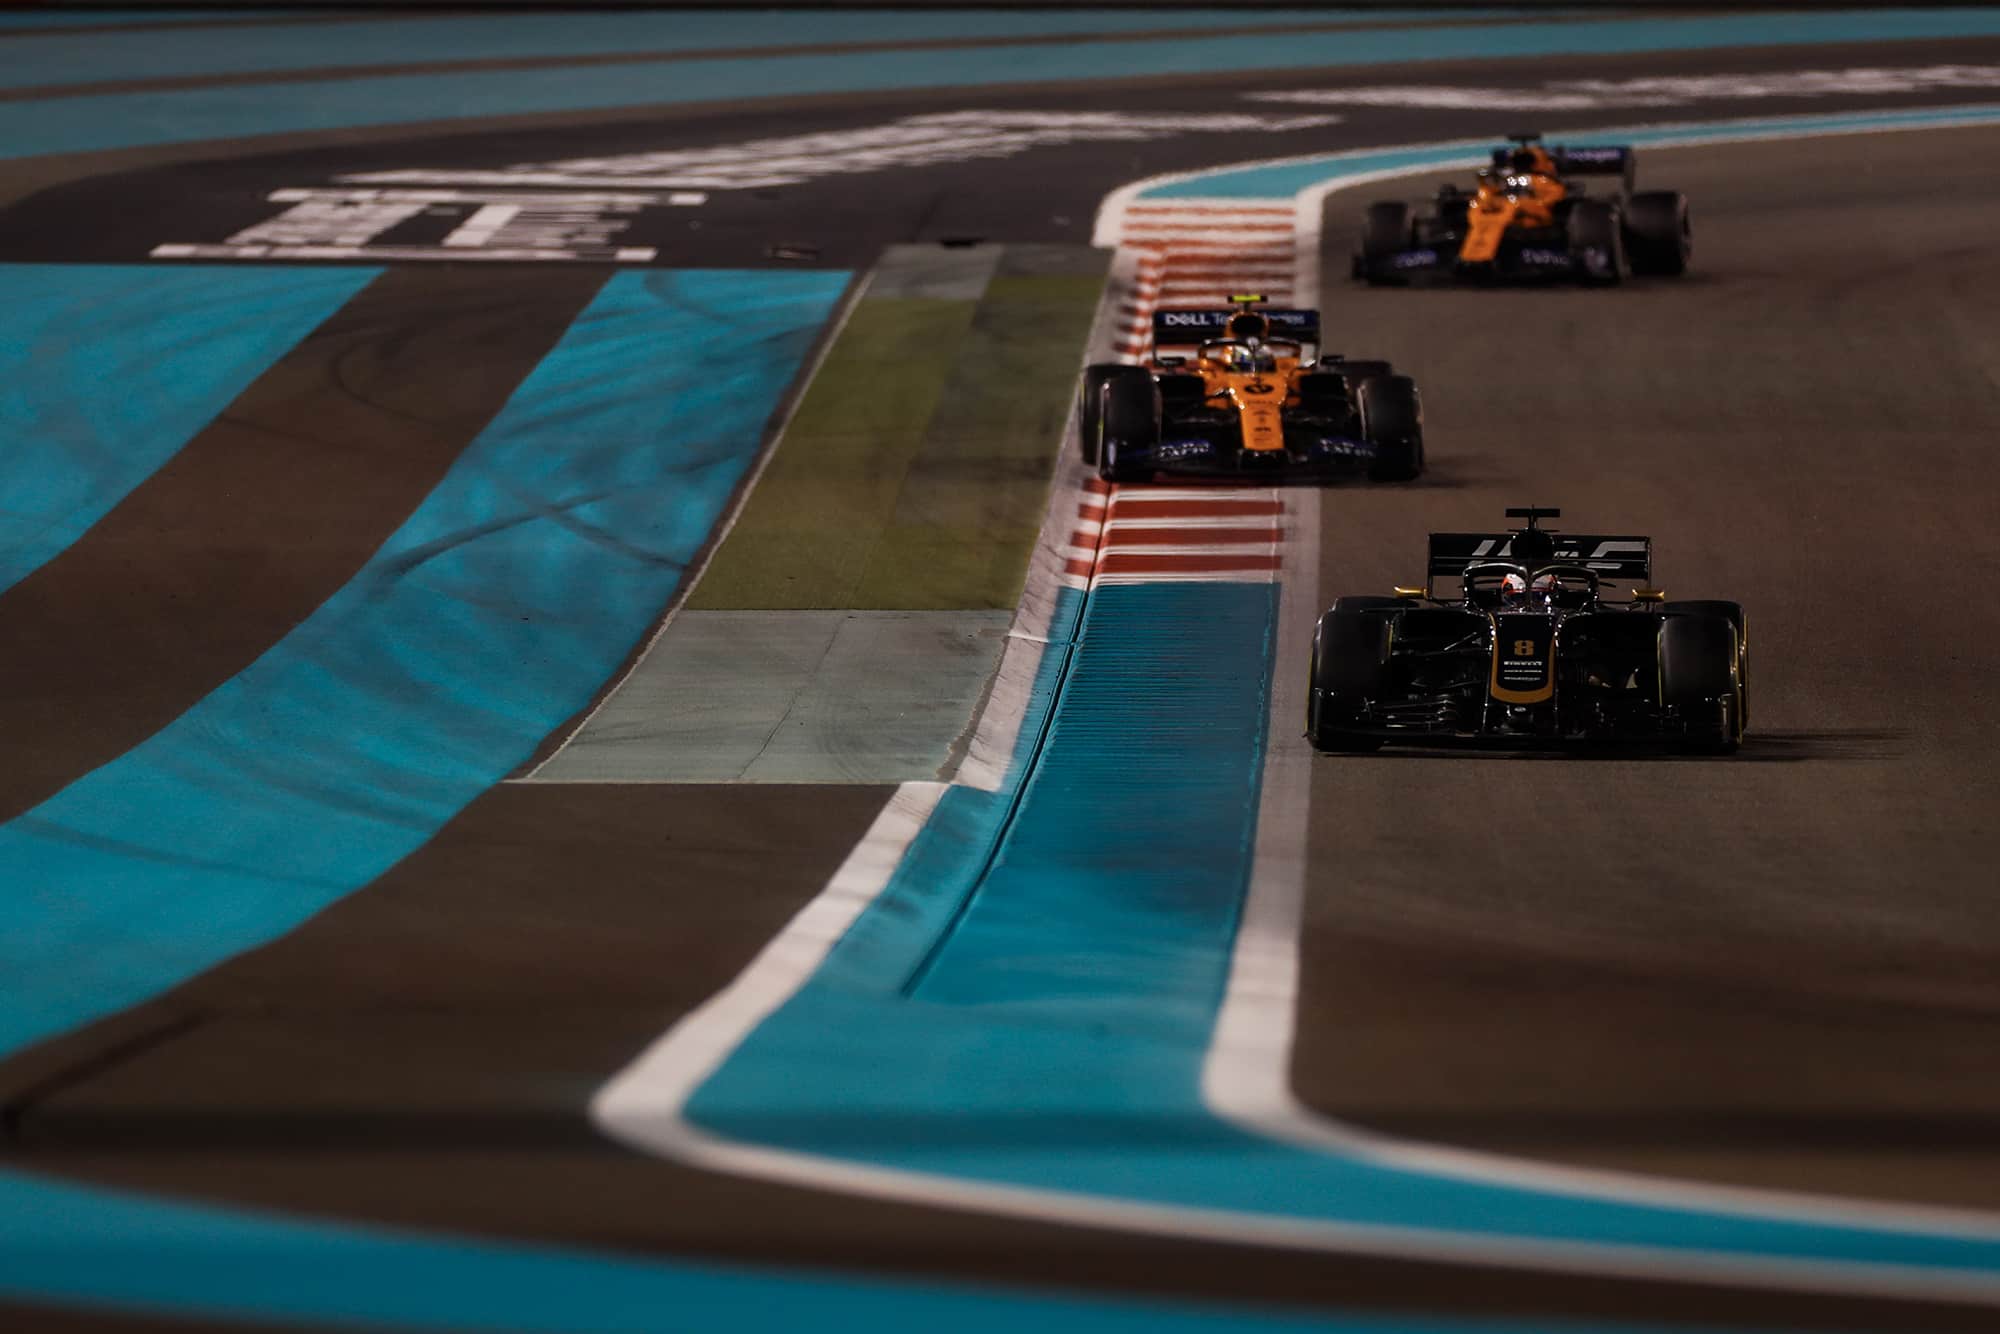 Romain Grosjean leads both McLarens during the 2019 Abu Dhabi Grand Prix